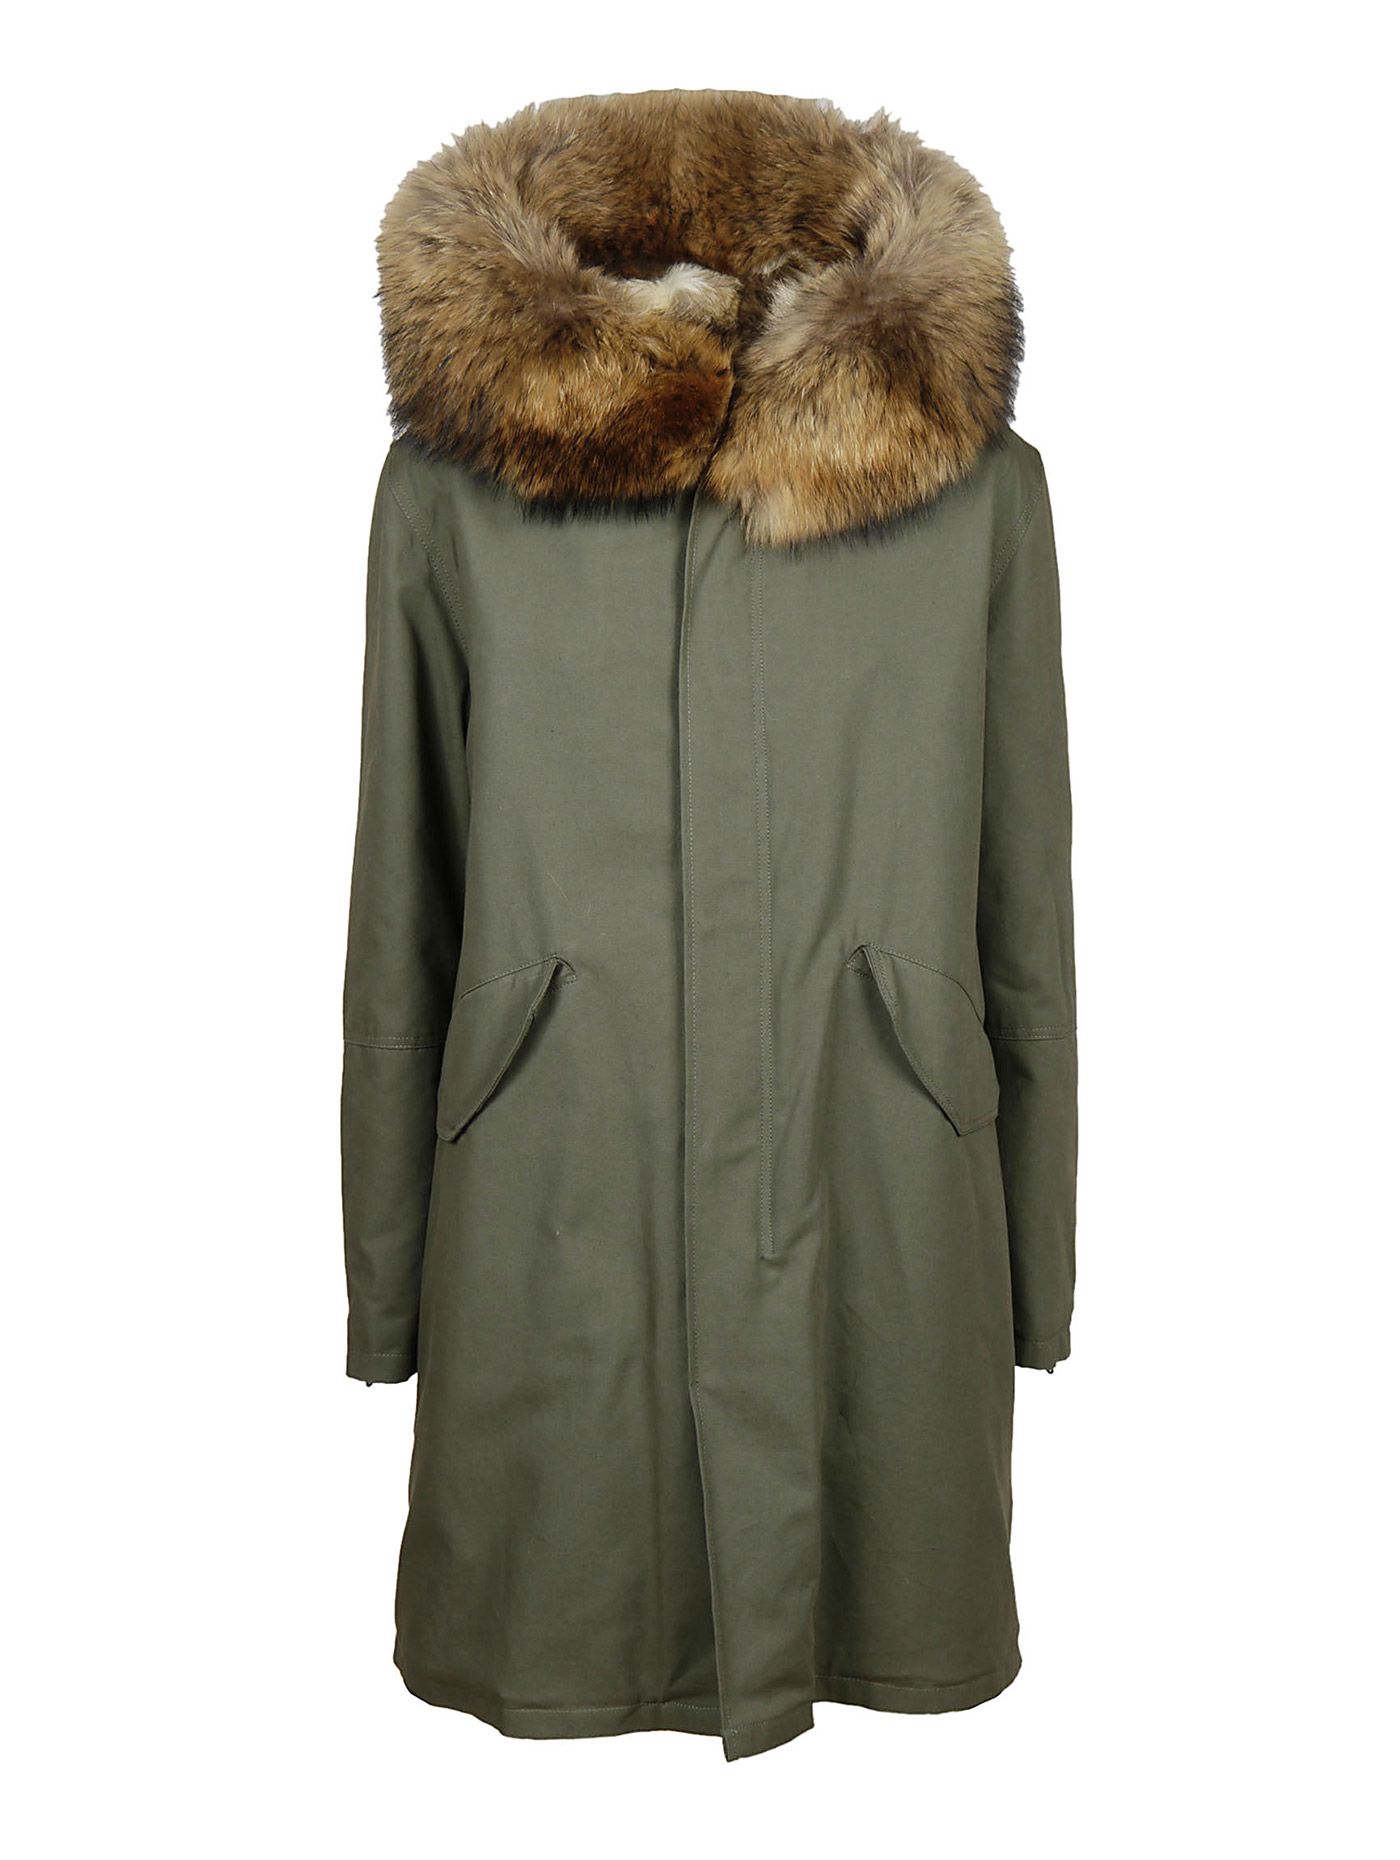 Furs66 - Fur Trimmed Parka - Green, Women's Coats & Jackets | Italist